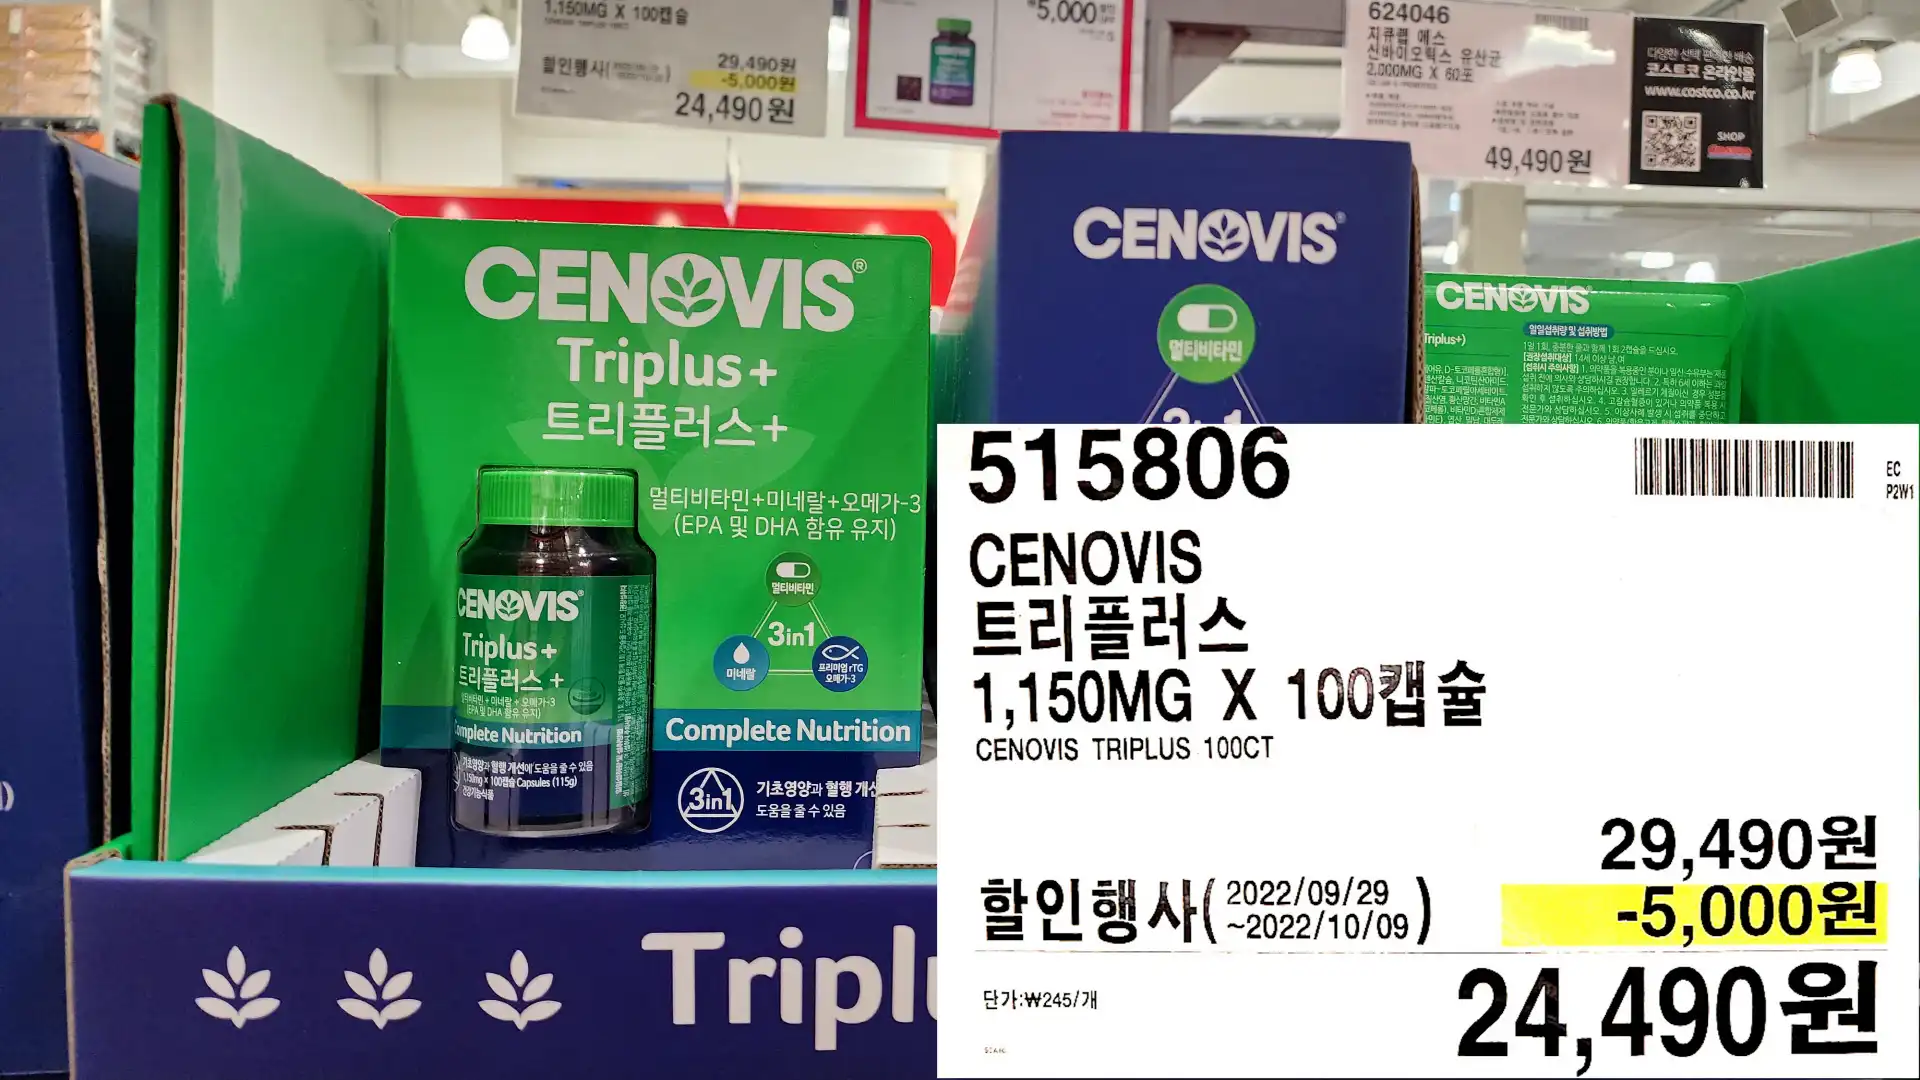 CENOVIS
트리플러스
1&#44;150MG X 100캡슐
CENOVIS TRIPLUS 100CT
24&#44;490원